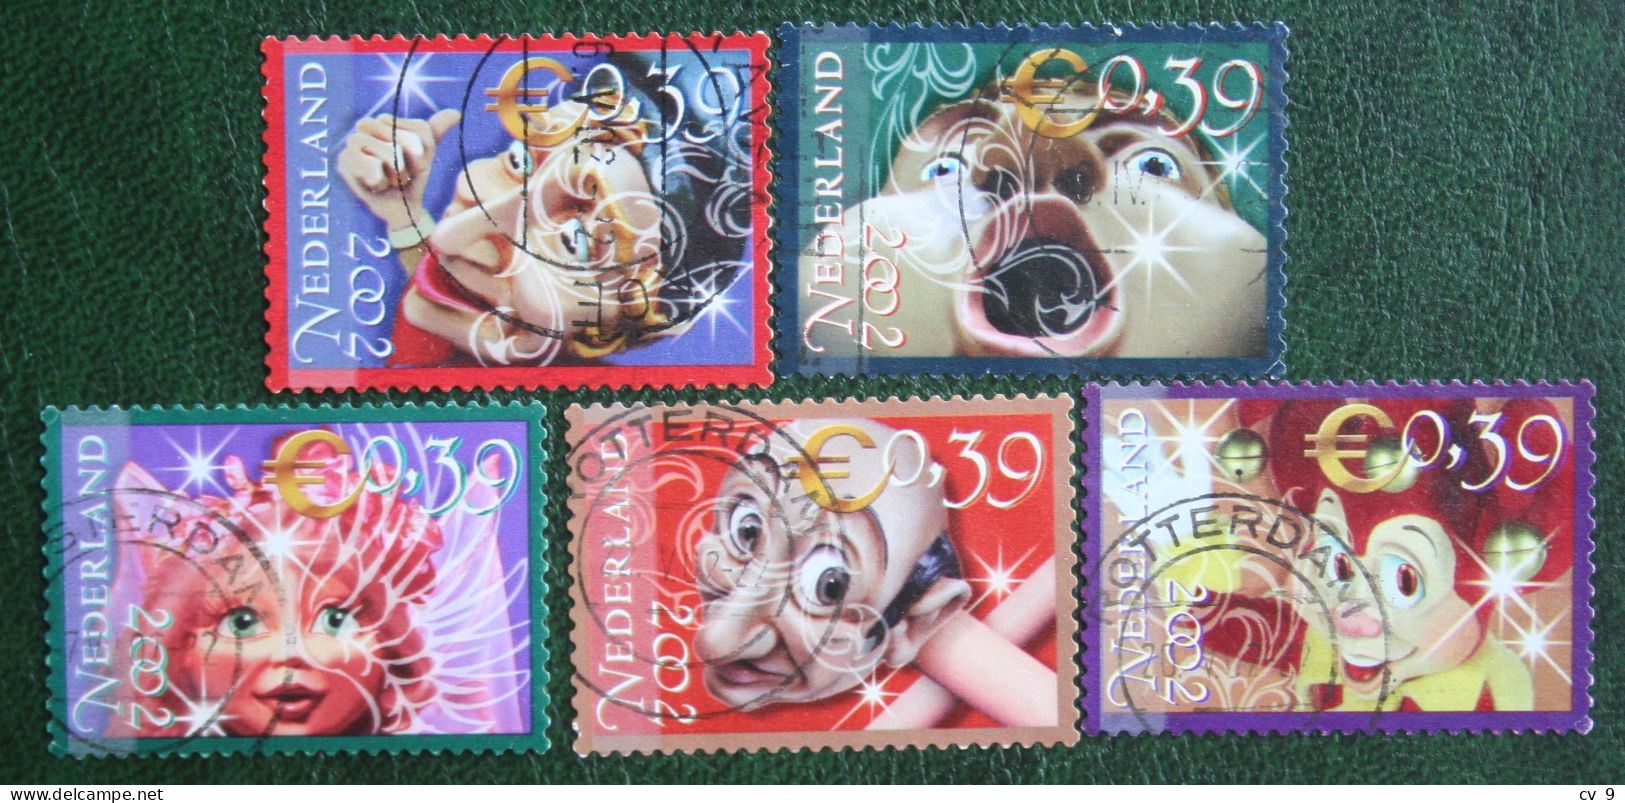 50 Jaar Efteling NVPH 2084-2088 (Mi 2004-2008) 2002 Gestempeld / USED NEDERLAND / NIEDERLANDE - Used Stamps